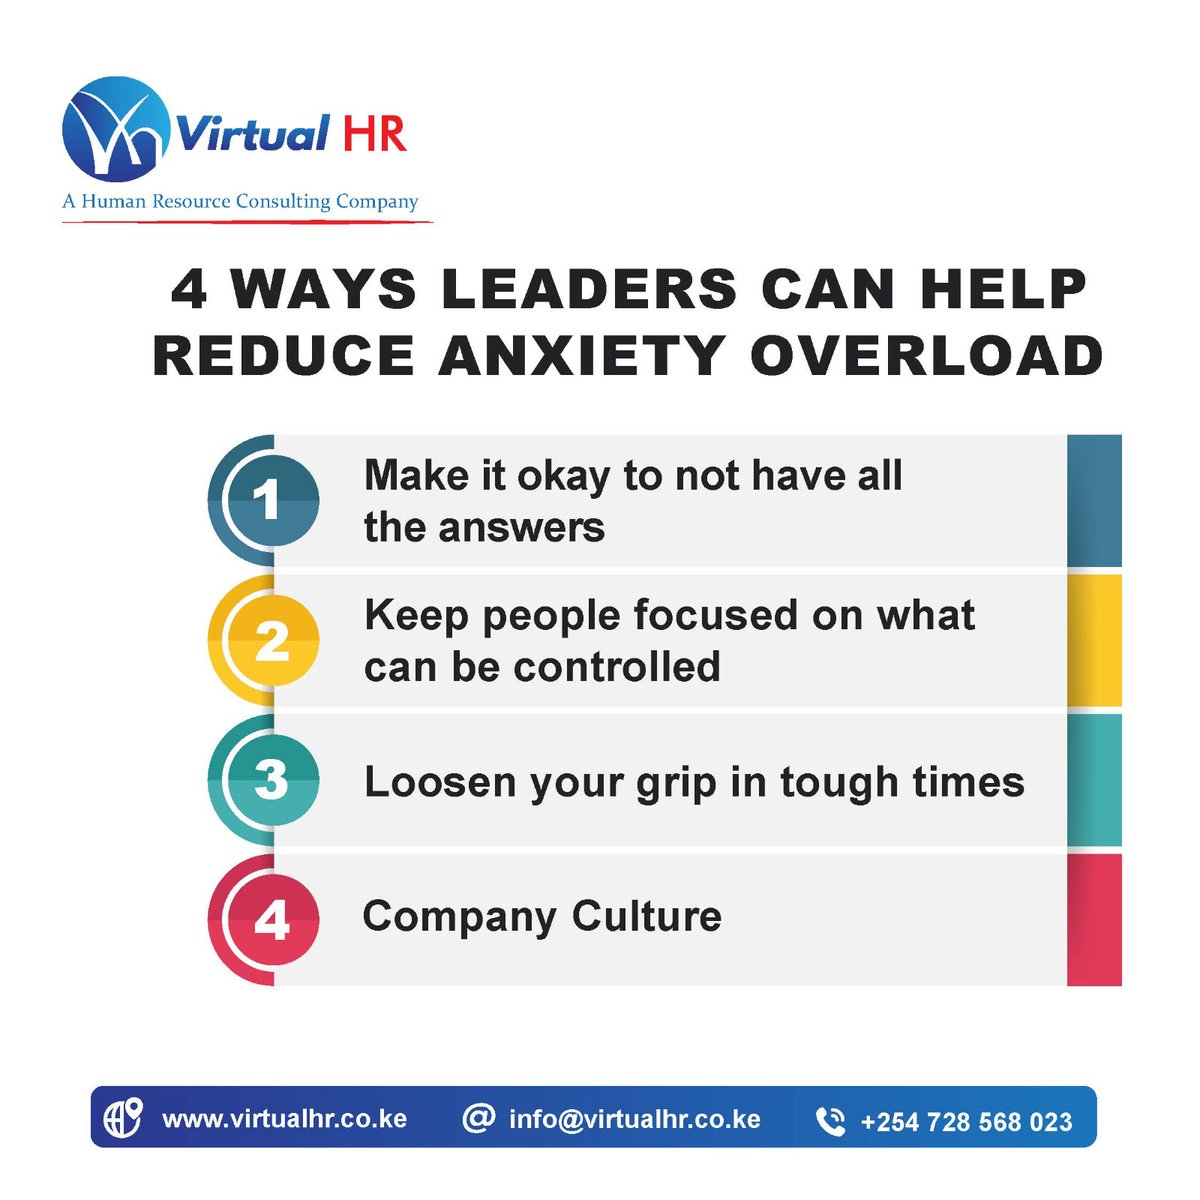 Unlock 4 powerful strategies for leaders to ease anxiety overload. #LeadershipTips #AnxietyRelief #EffectiveStrategies #LeadershipDevelopment #HR